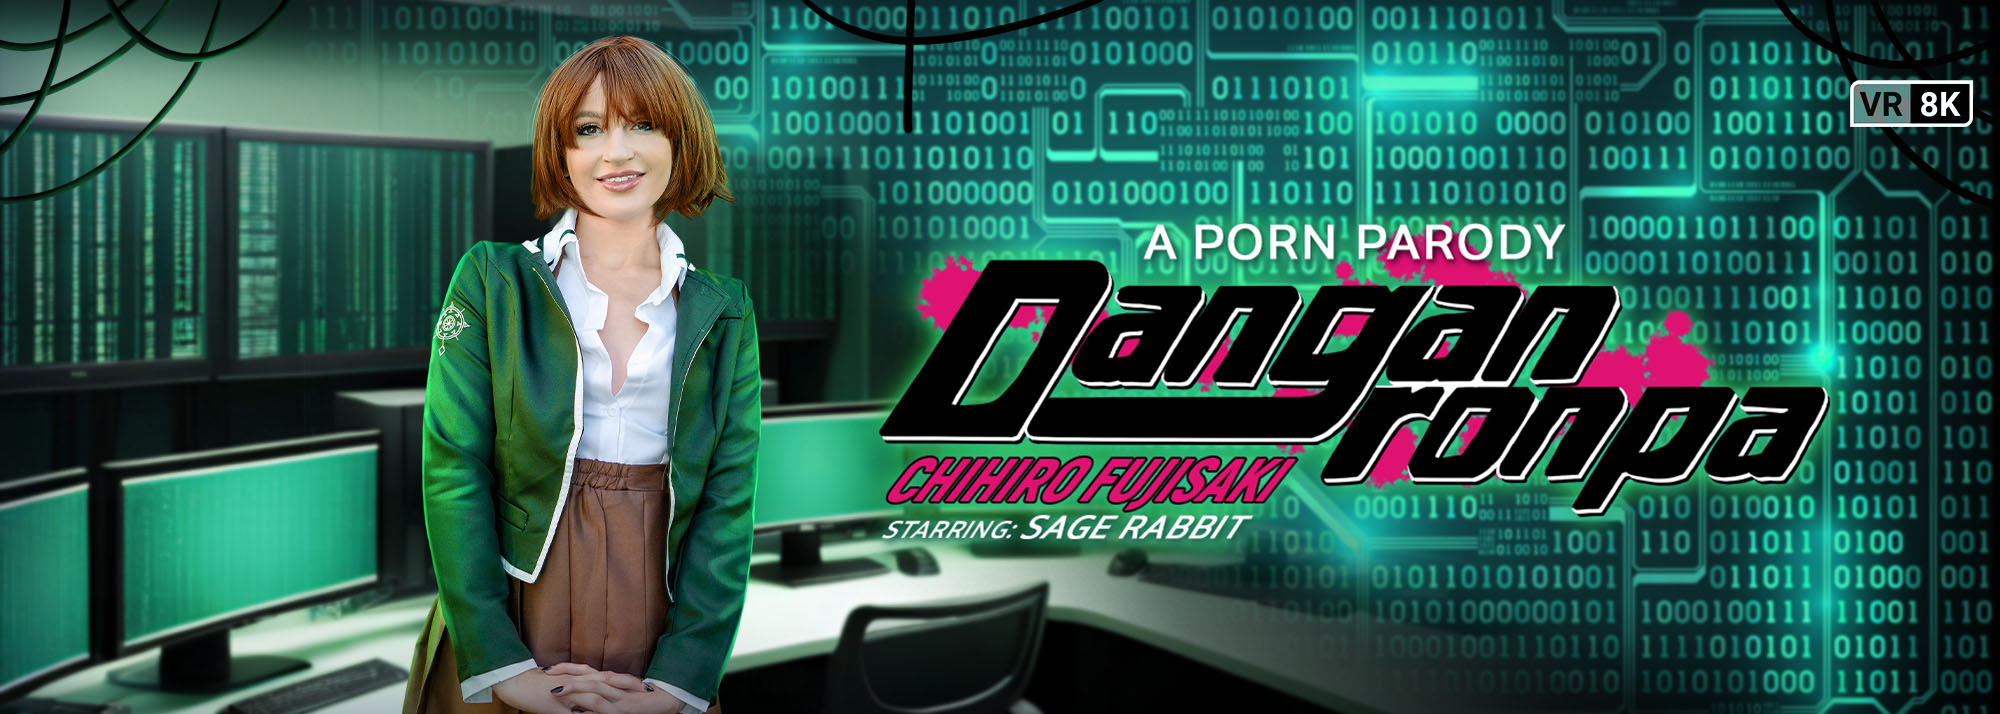 Danganronpa: Chihiro Fujisaki (A Porn Parody) - VR Video, Starring: Sage Rabbit